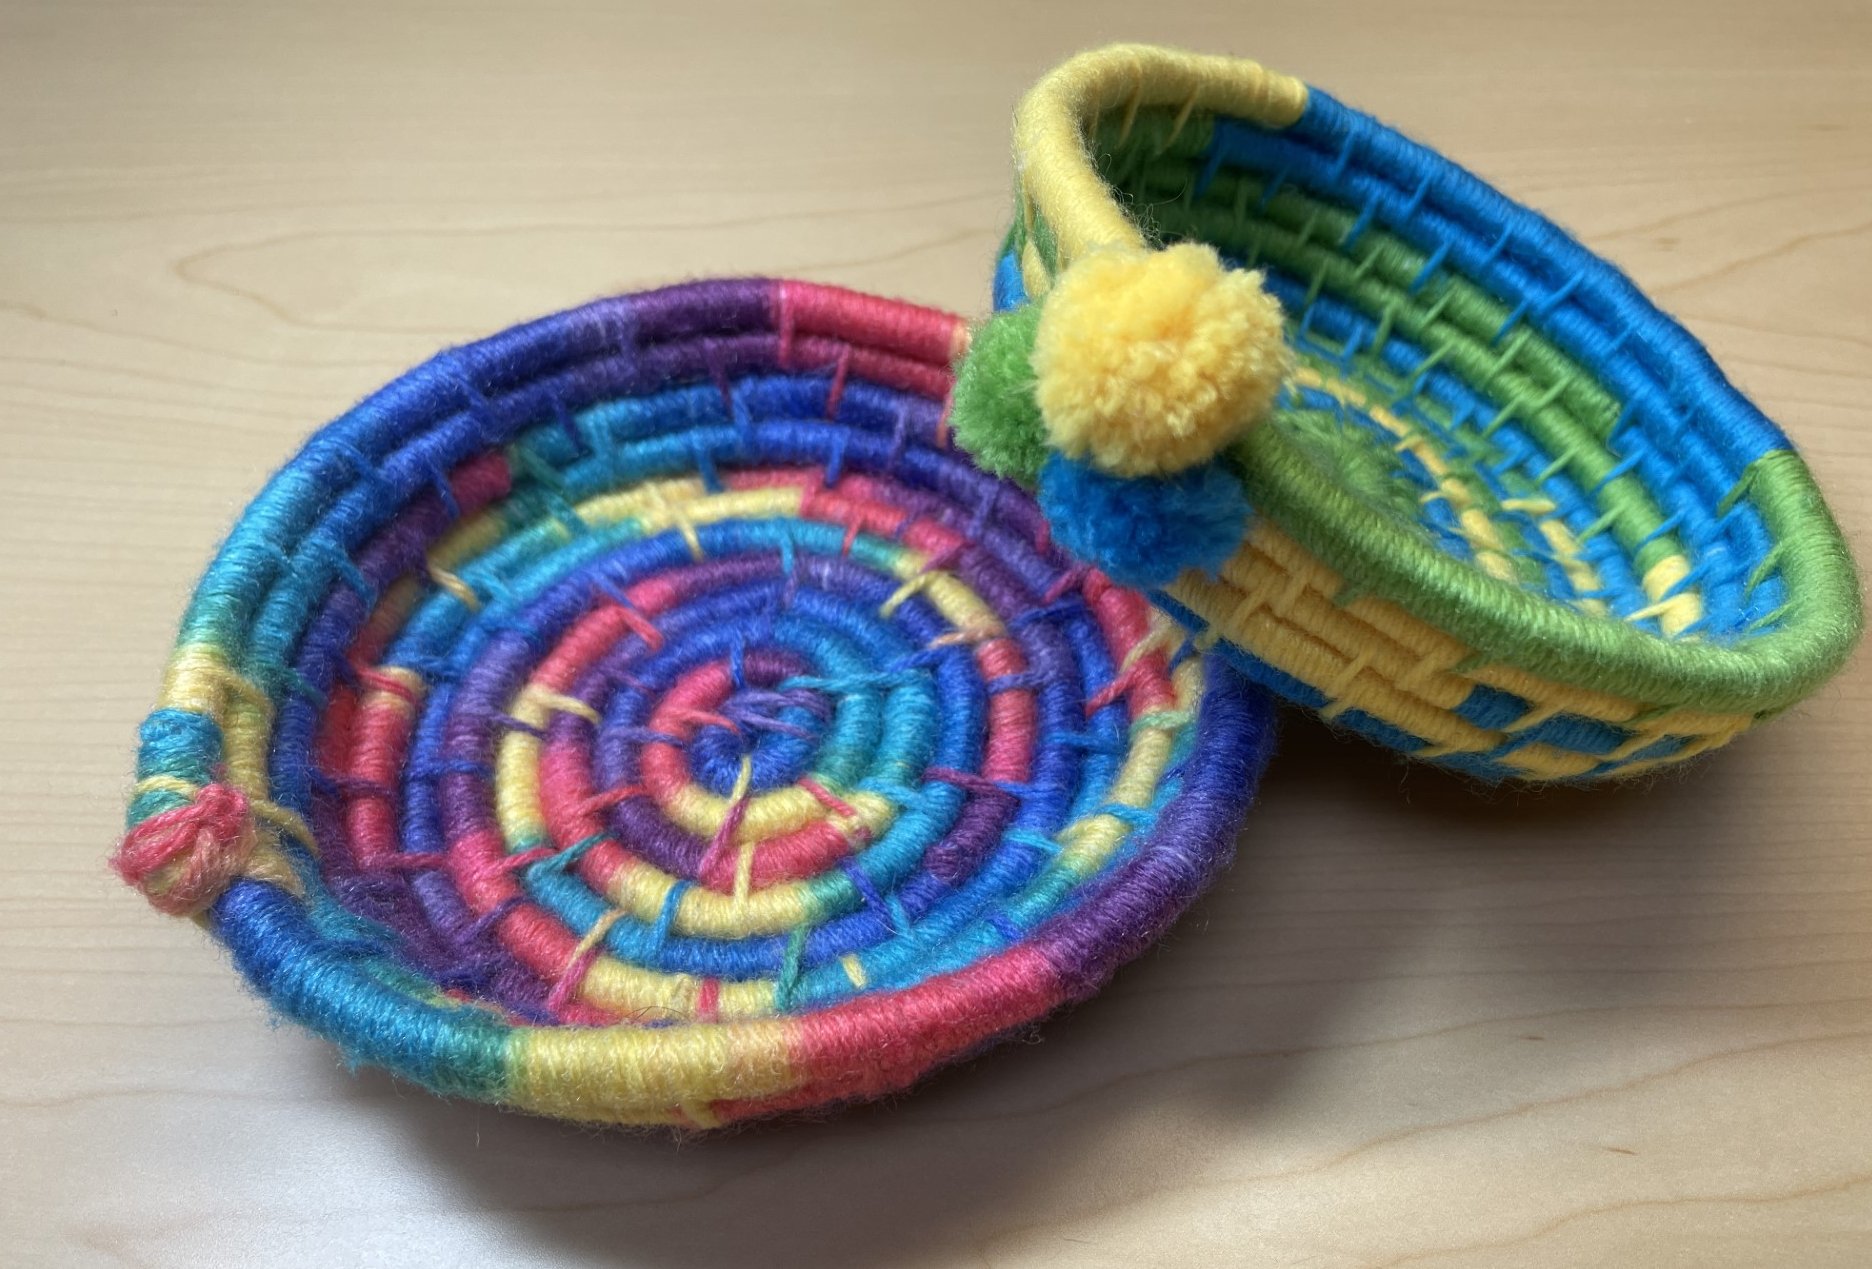 Woven Yarn Basket - Happy Hour Projects